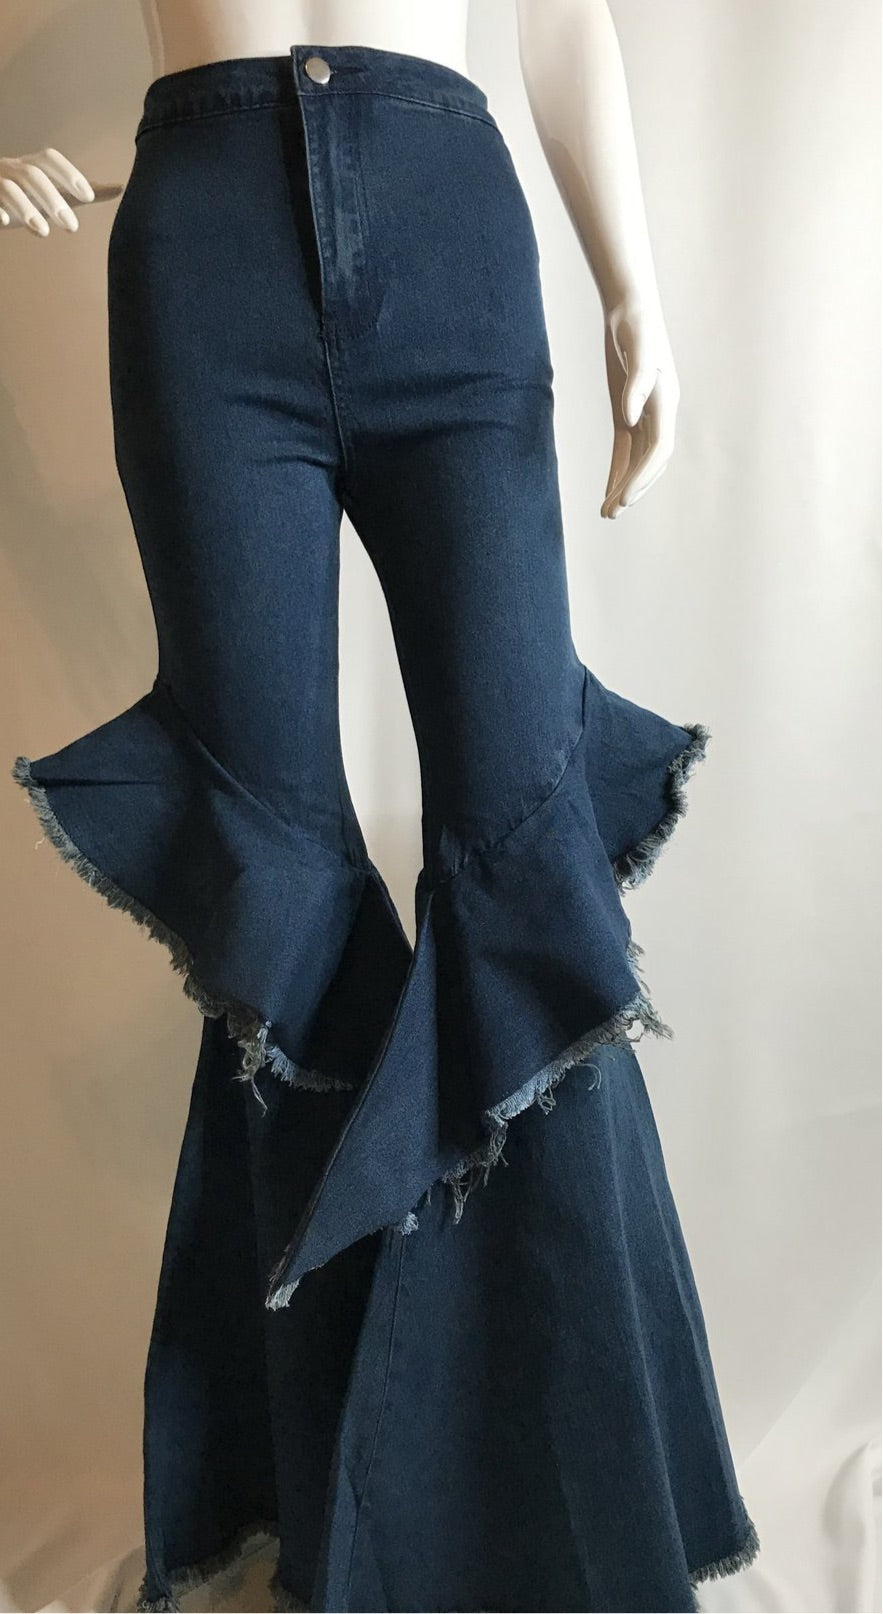 Ruffle Bell Bottom Jeans – Unique Design